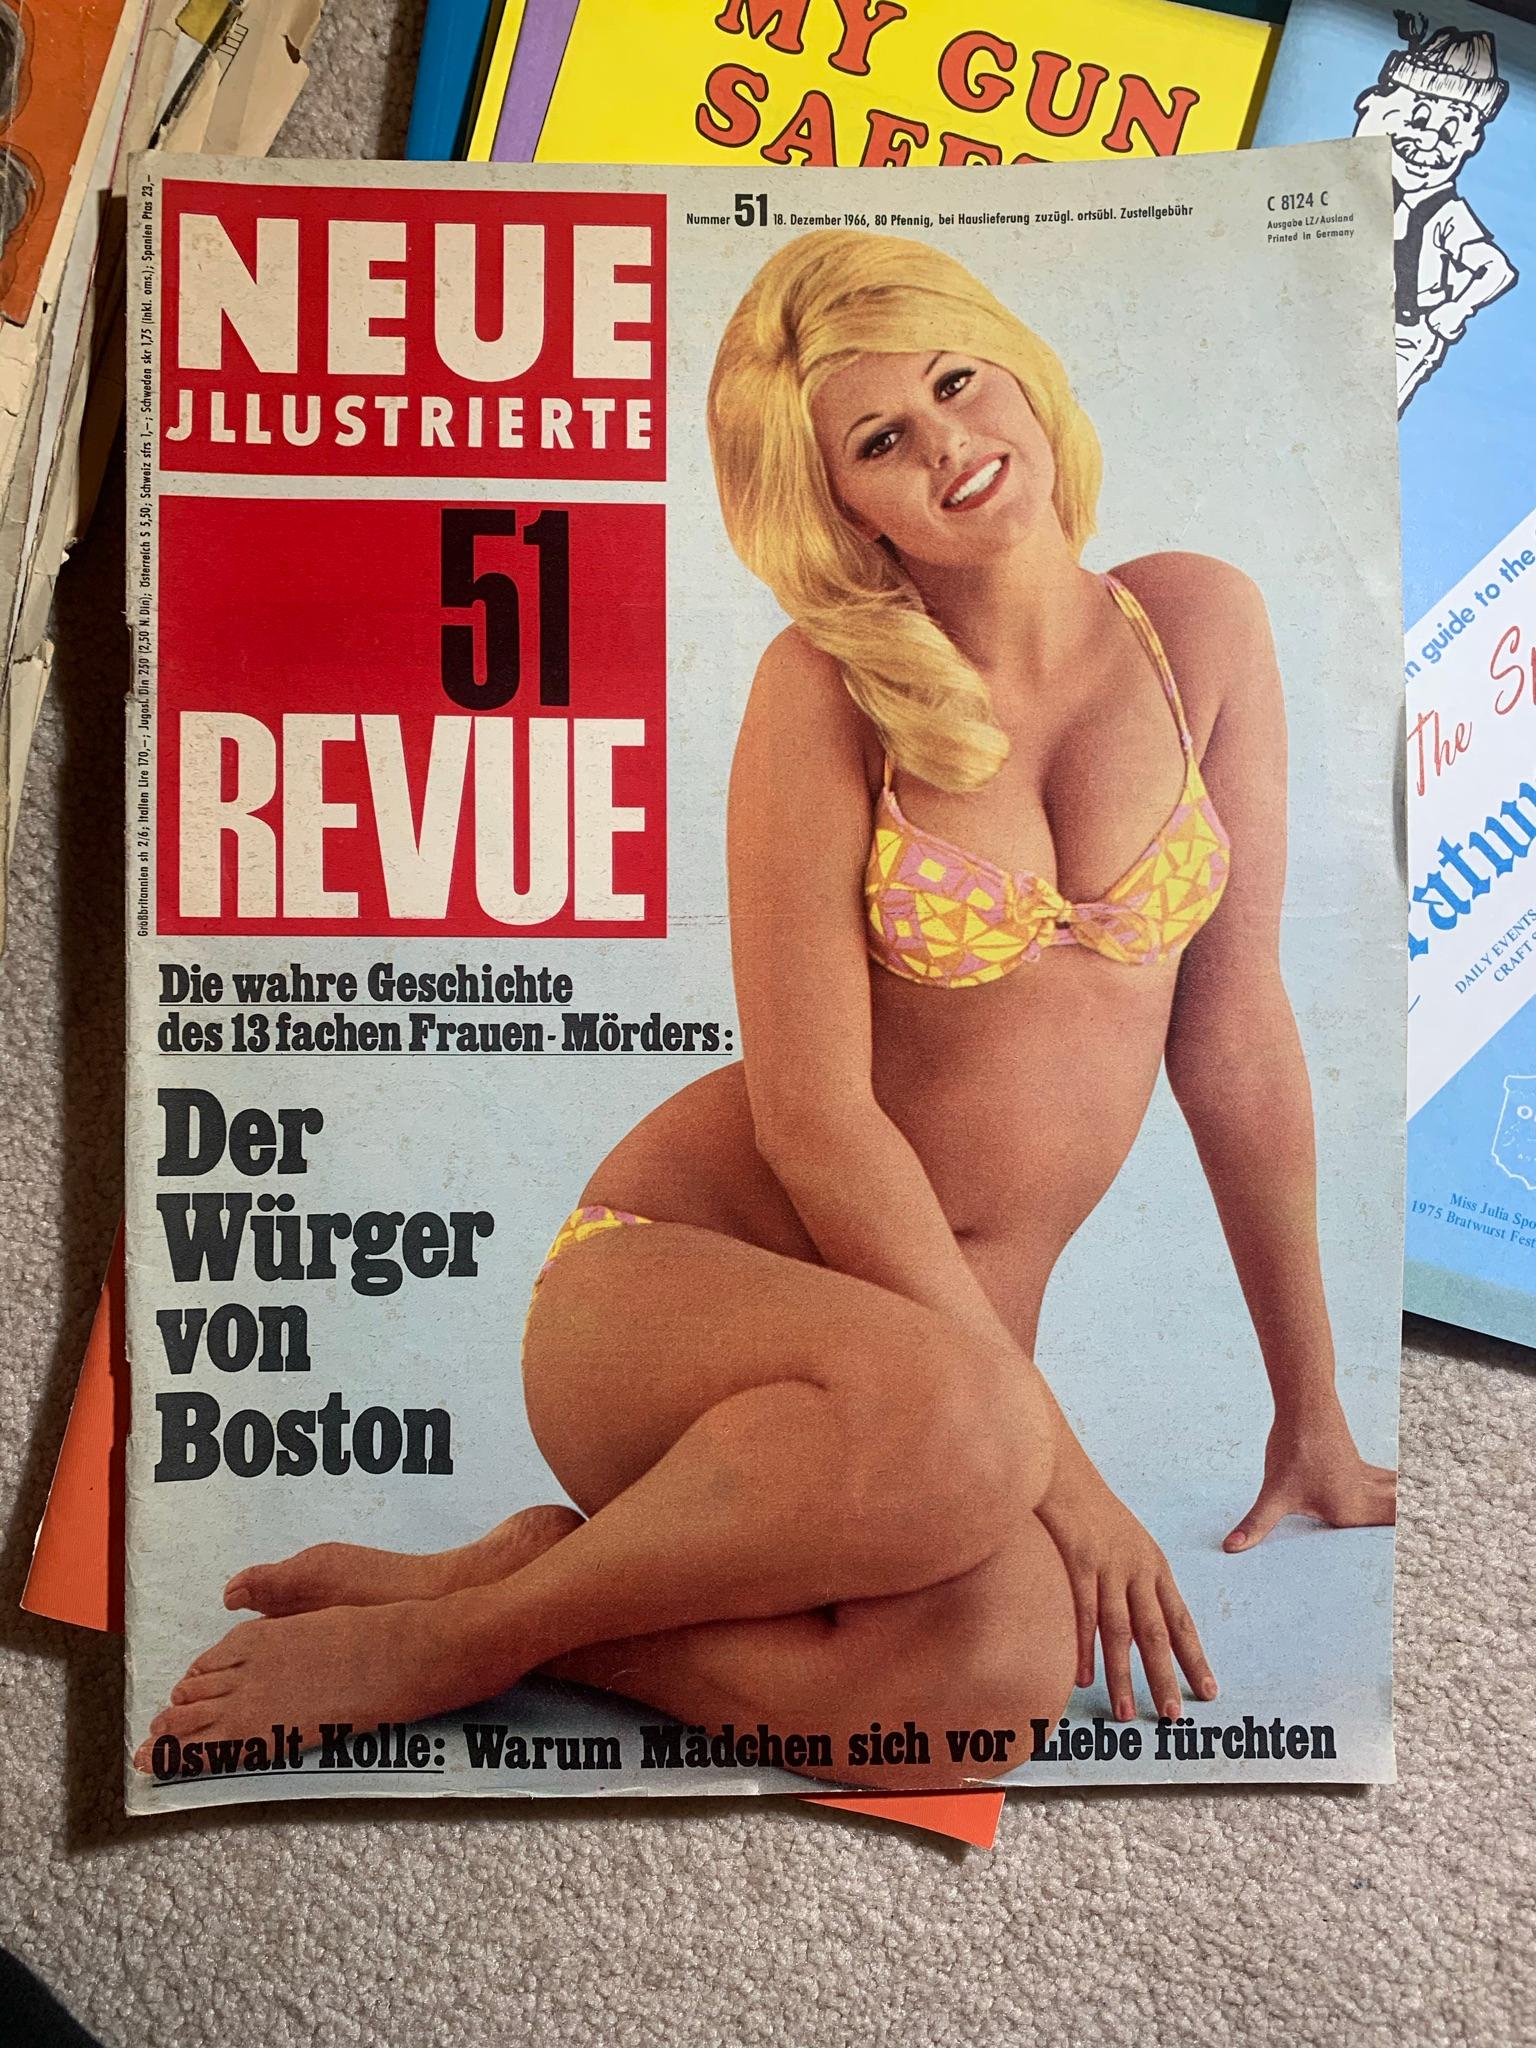 2 Vintage German MÃ¼nchner Illustrierte Magazines, Life Magazines